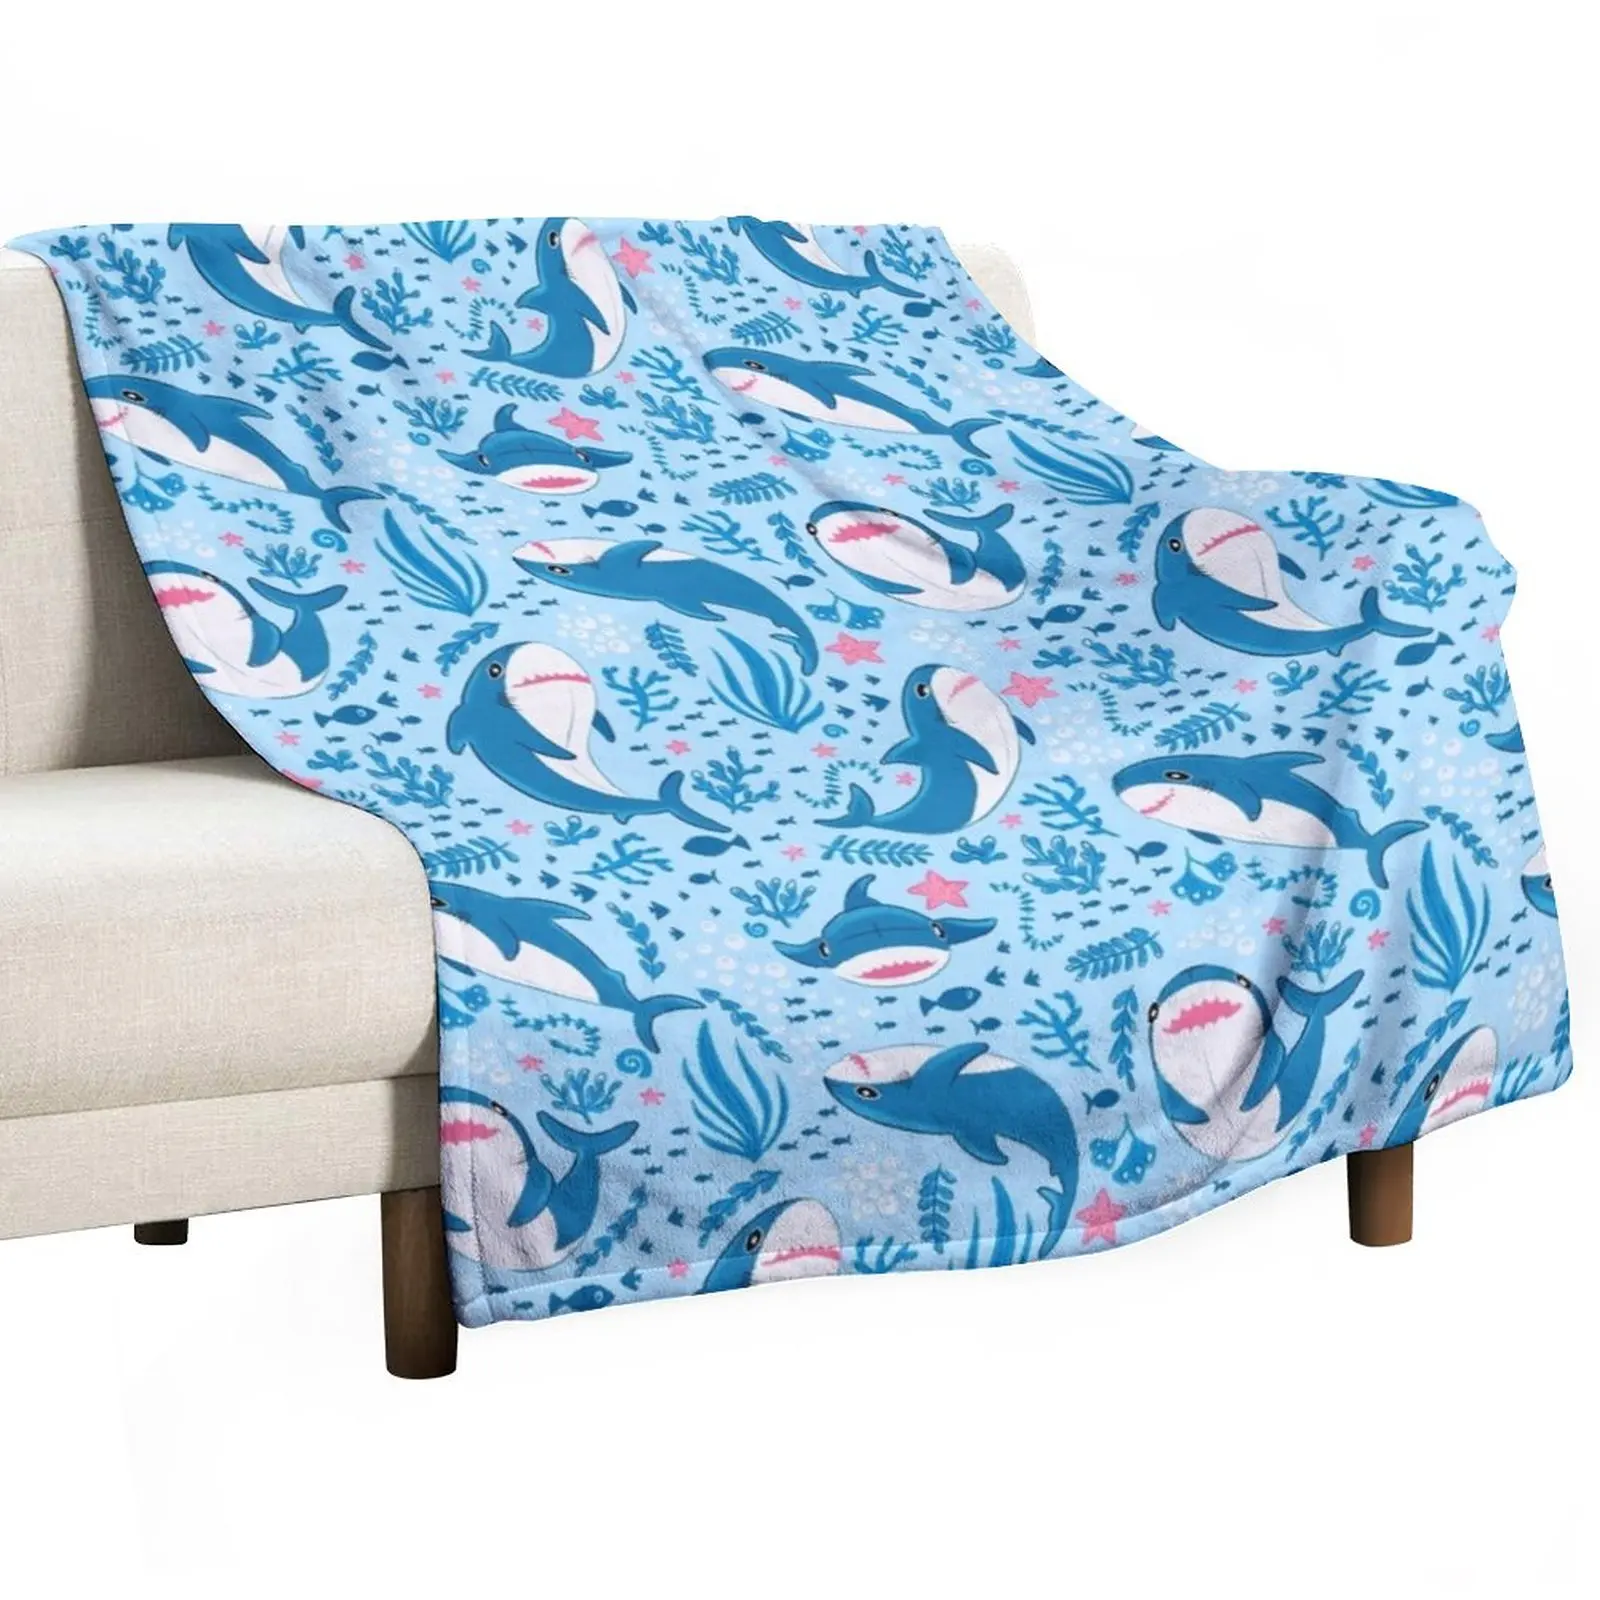 

Blahaj shark Throw Blanket Blankets Sofas Of Decoration Sofas Soft Plaid